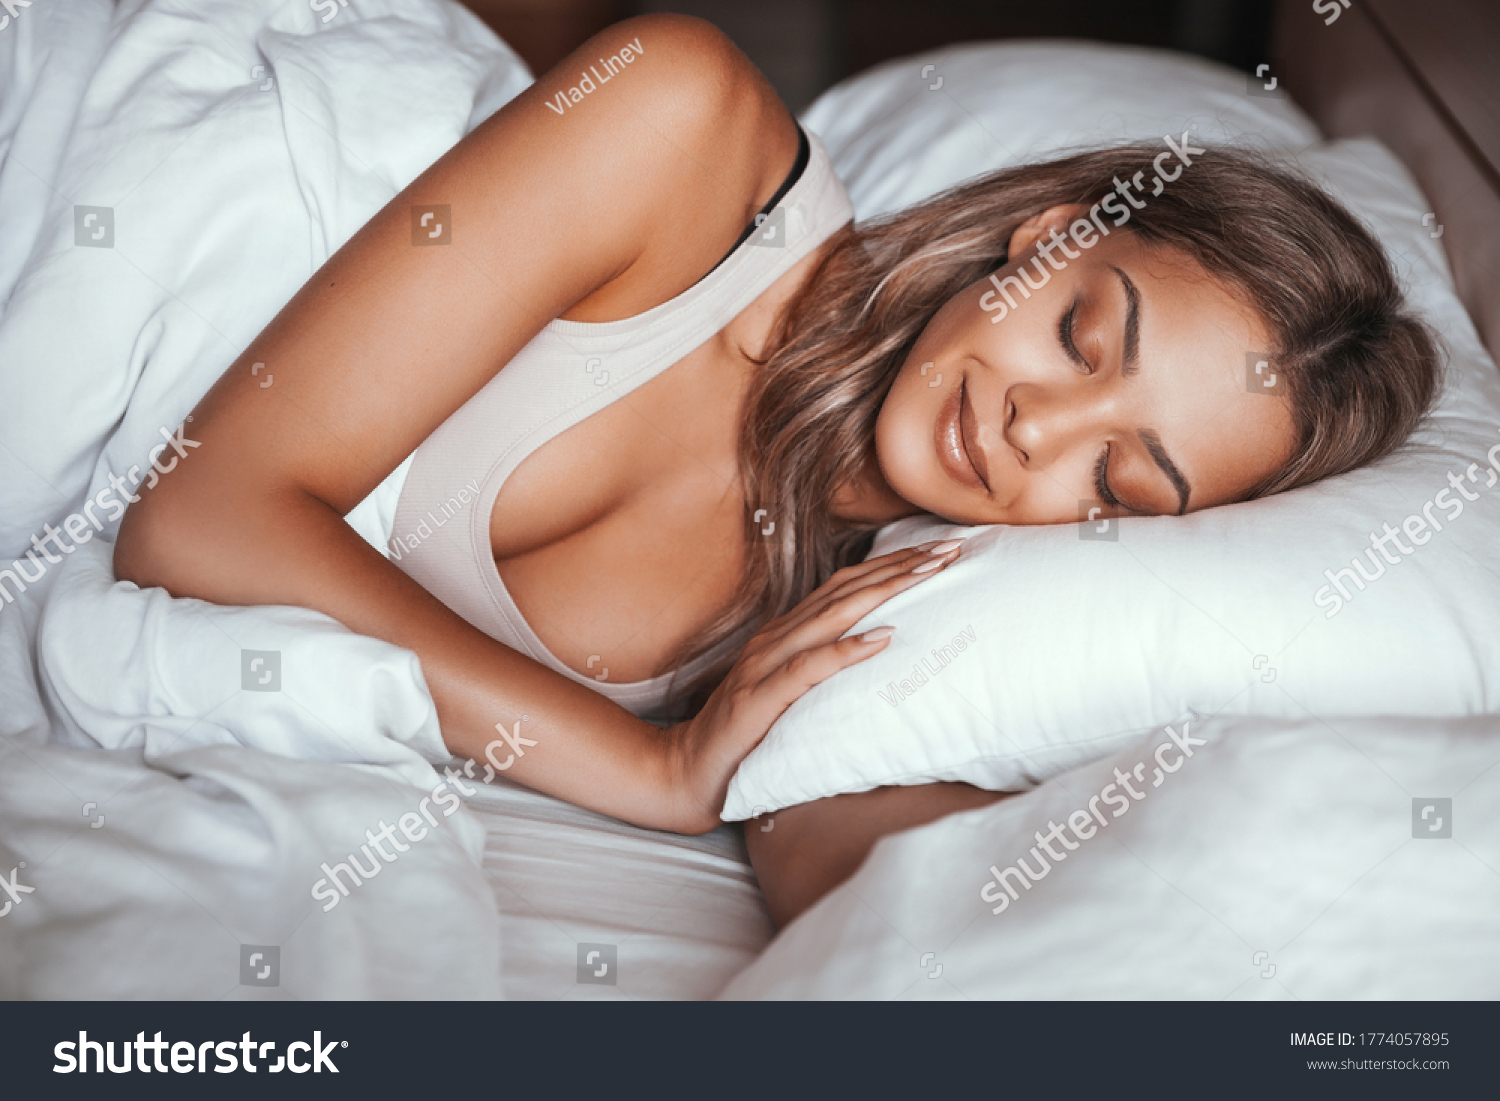 Sleepy girl - nude photos